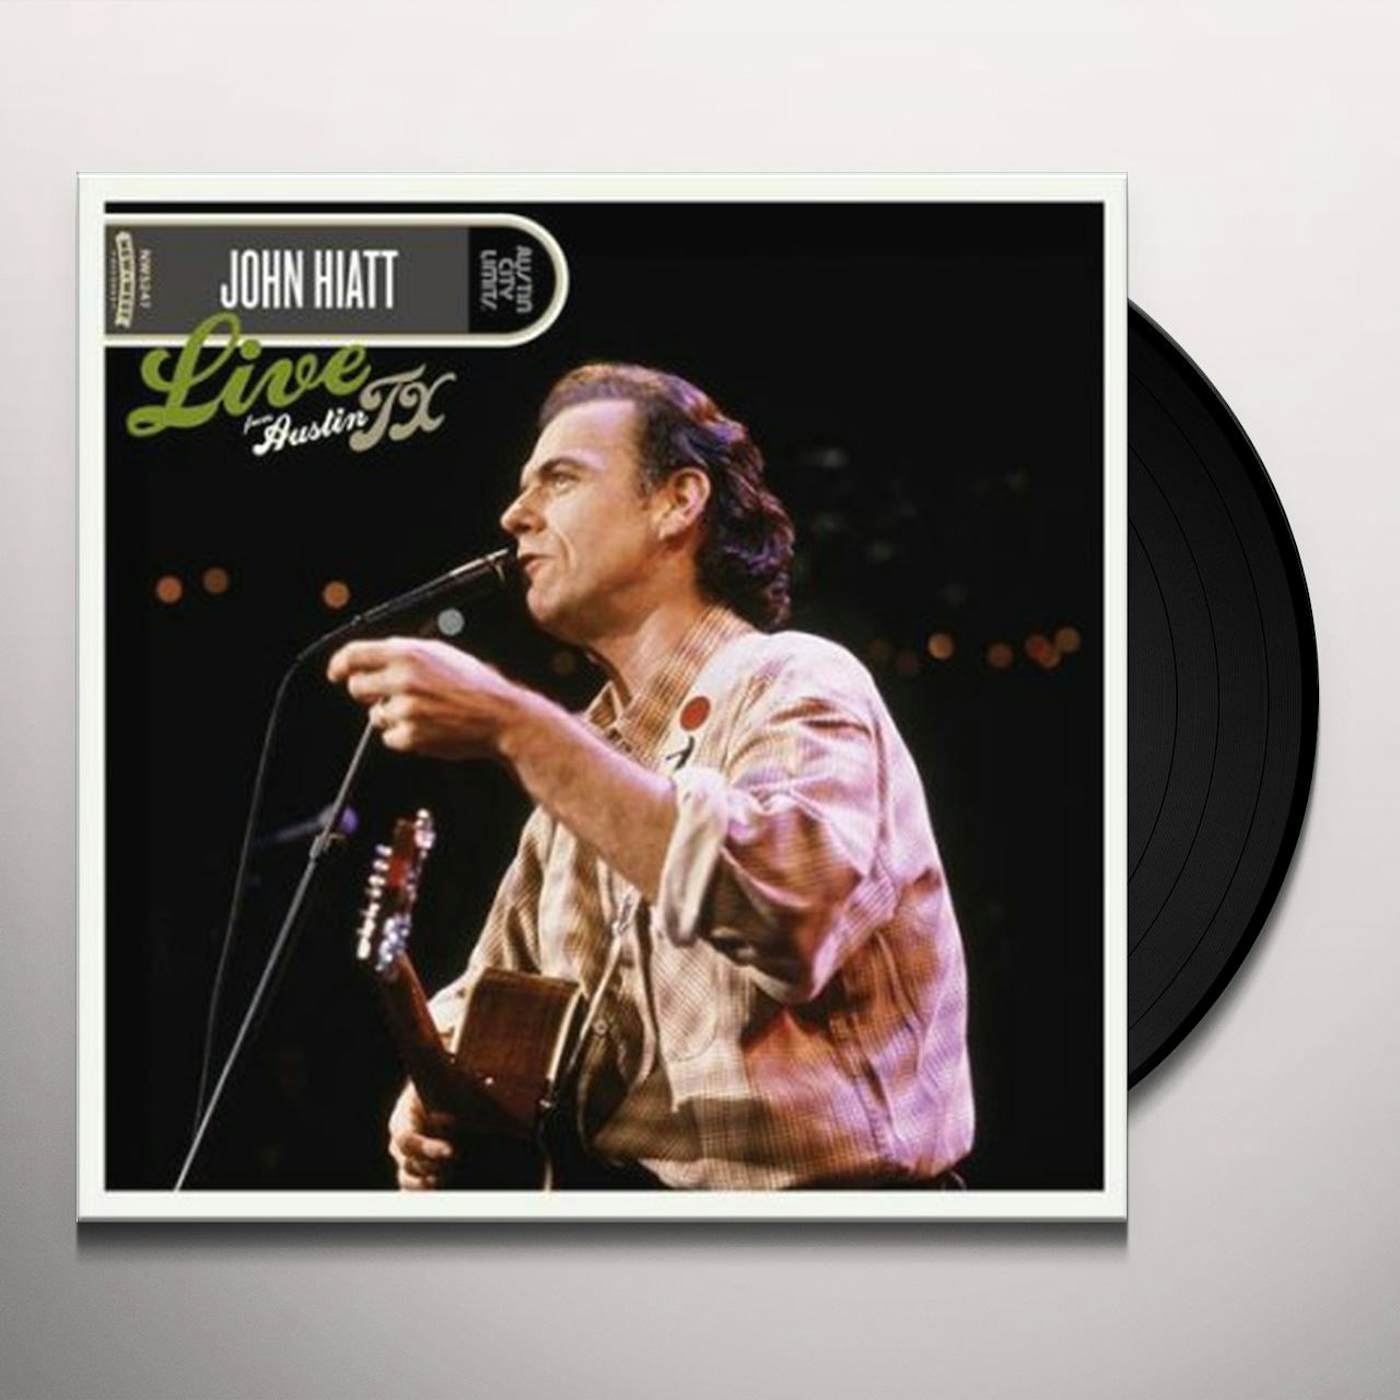 John Hiatt Live from Austin TX Vinyl Record